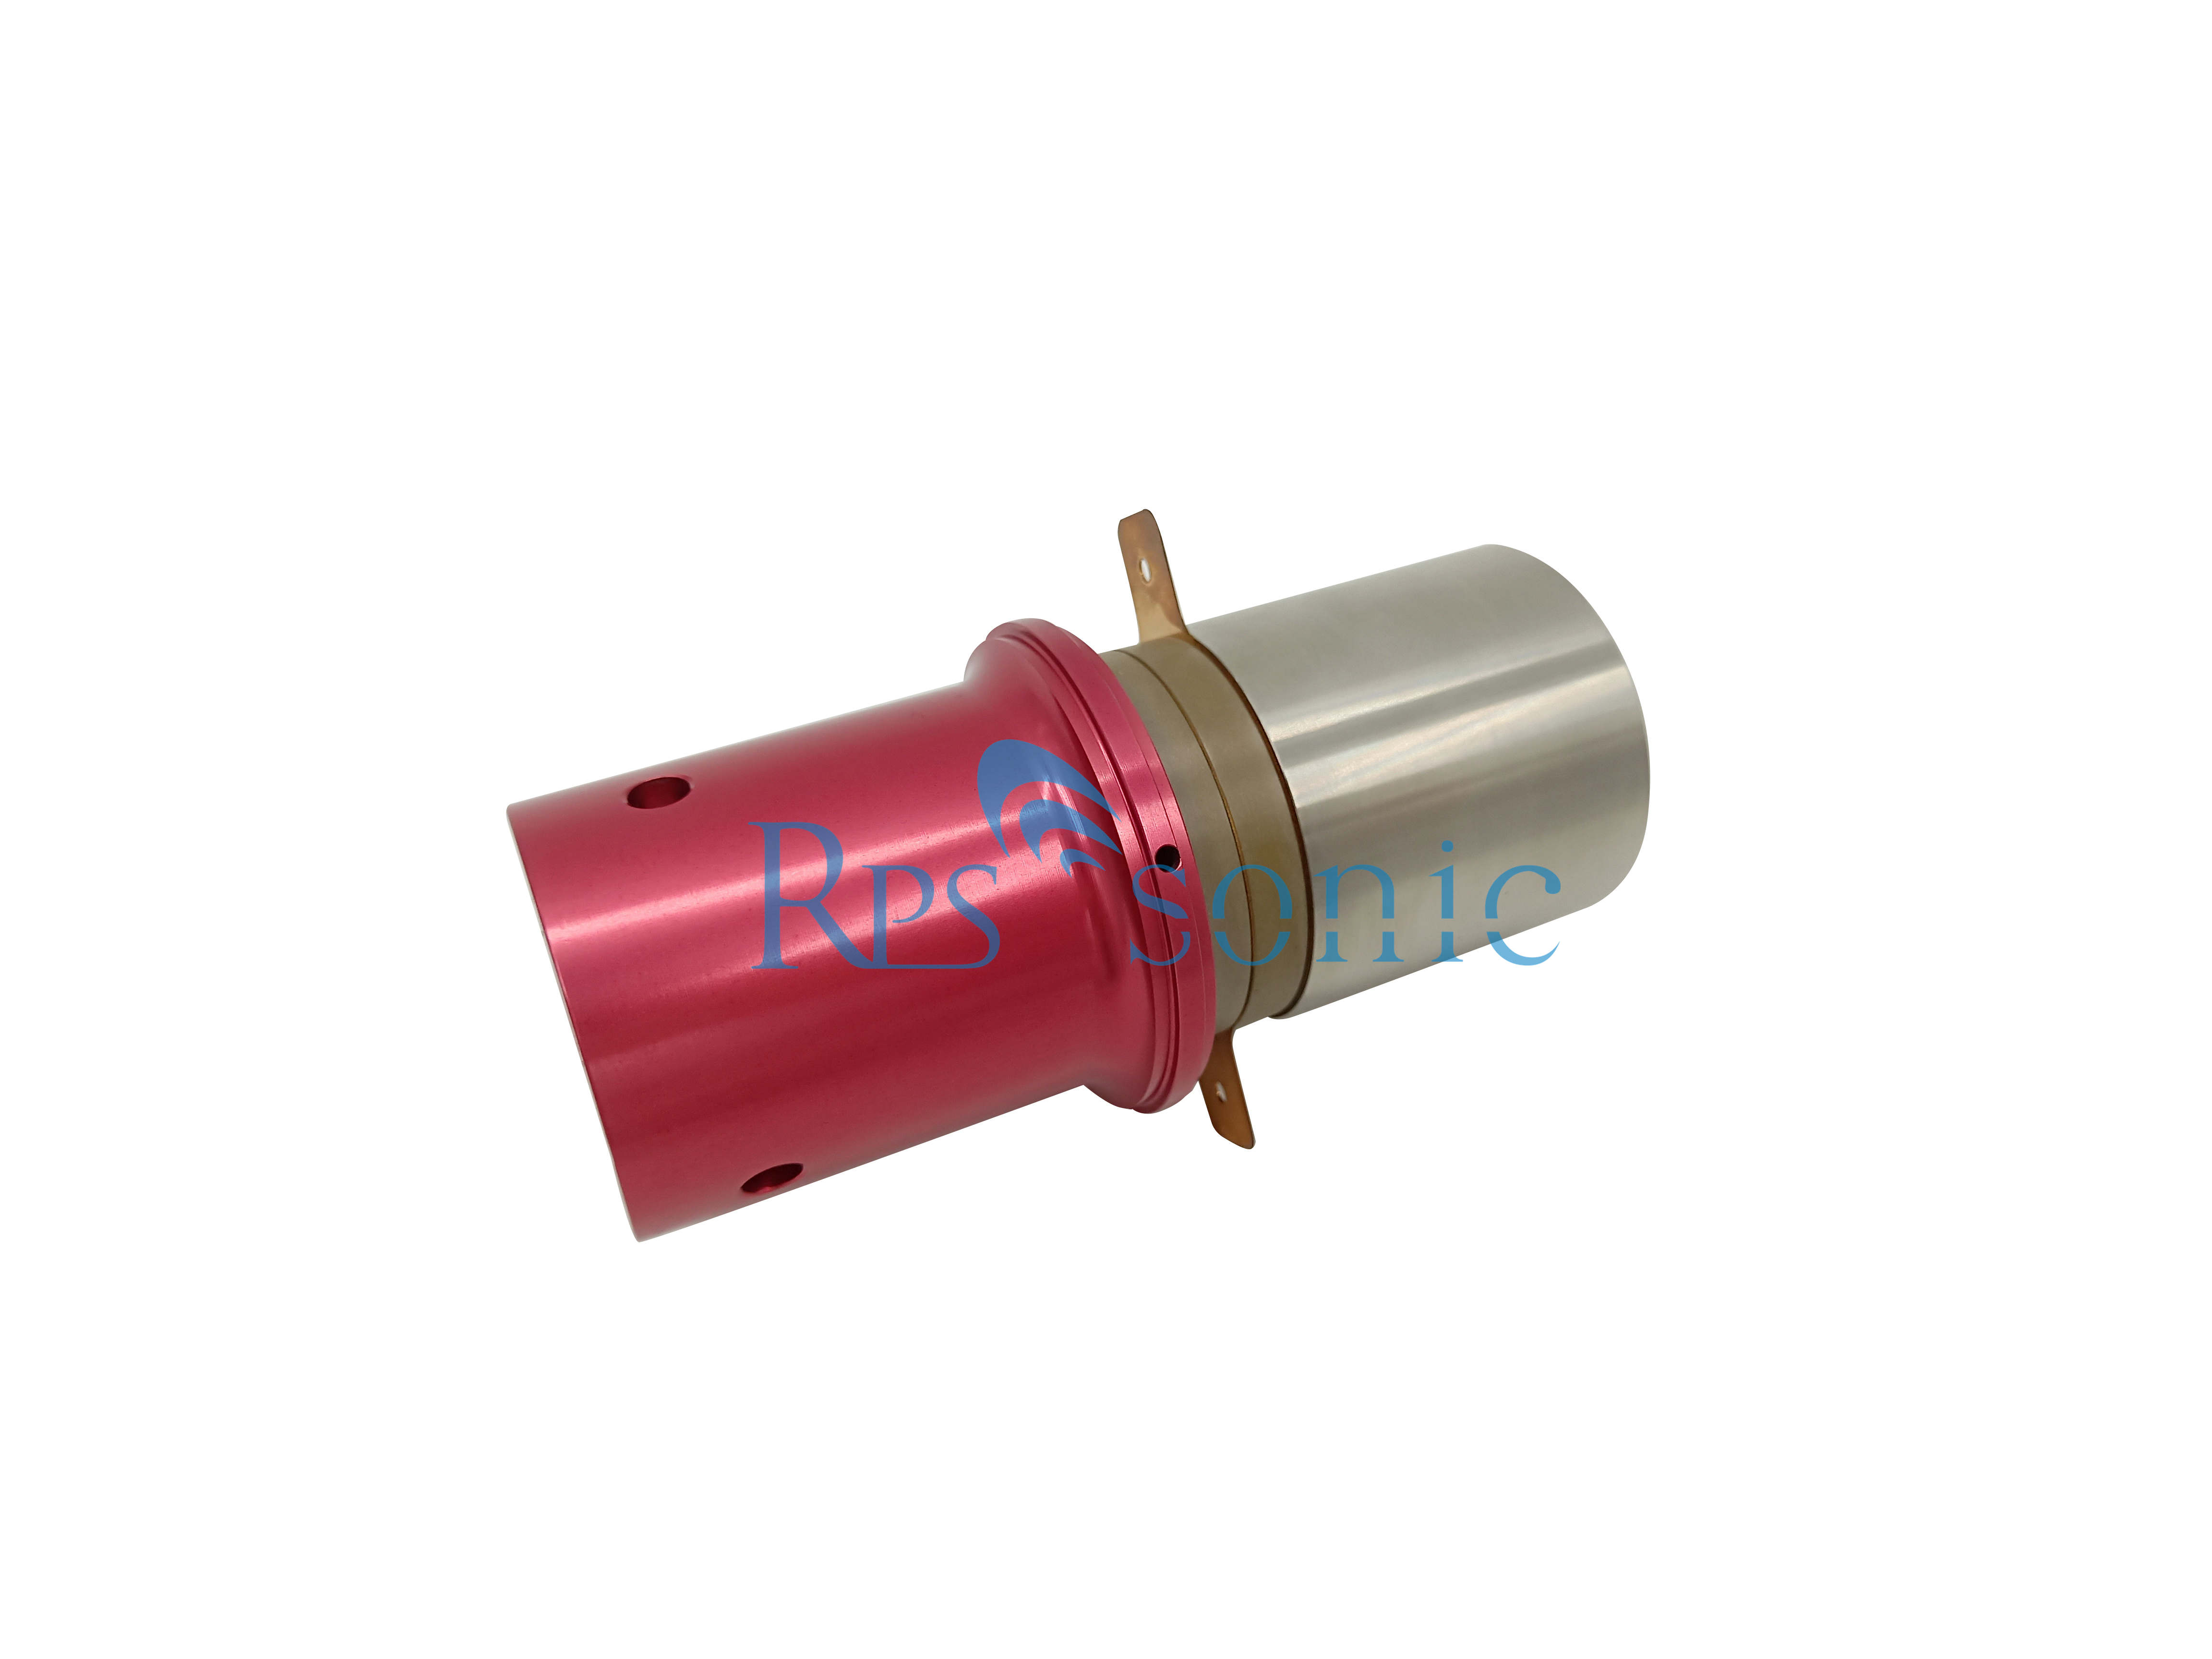 Dukane 110-3142 Convertidor de soldadura ultrasónica Transductor de 400-800 vatios